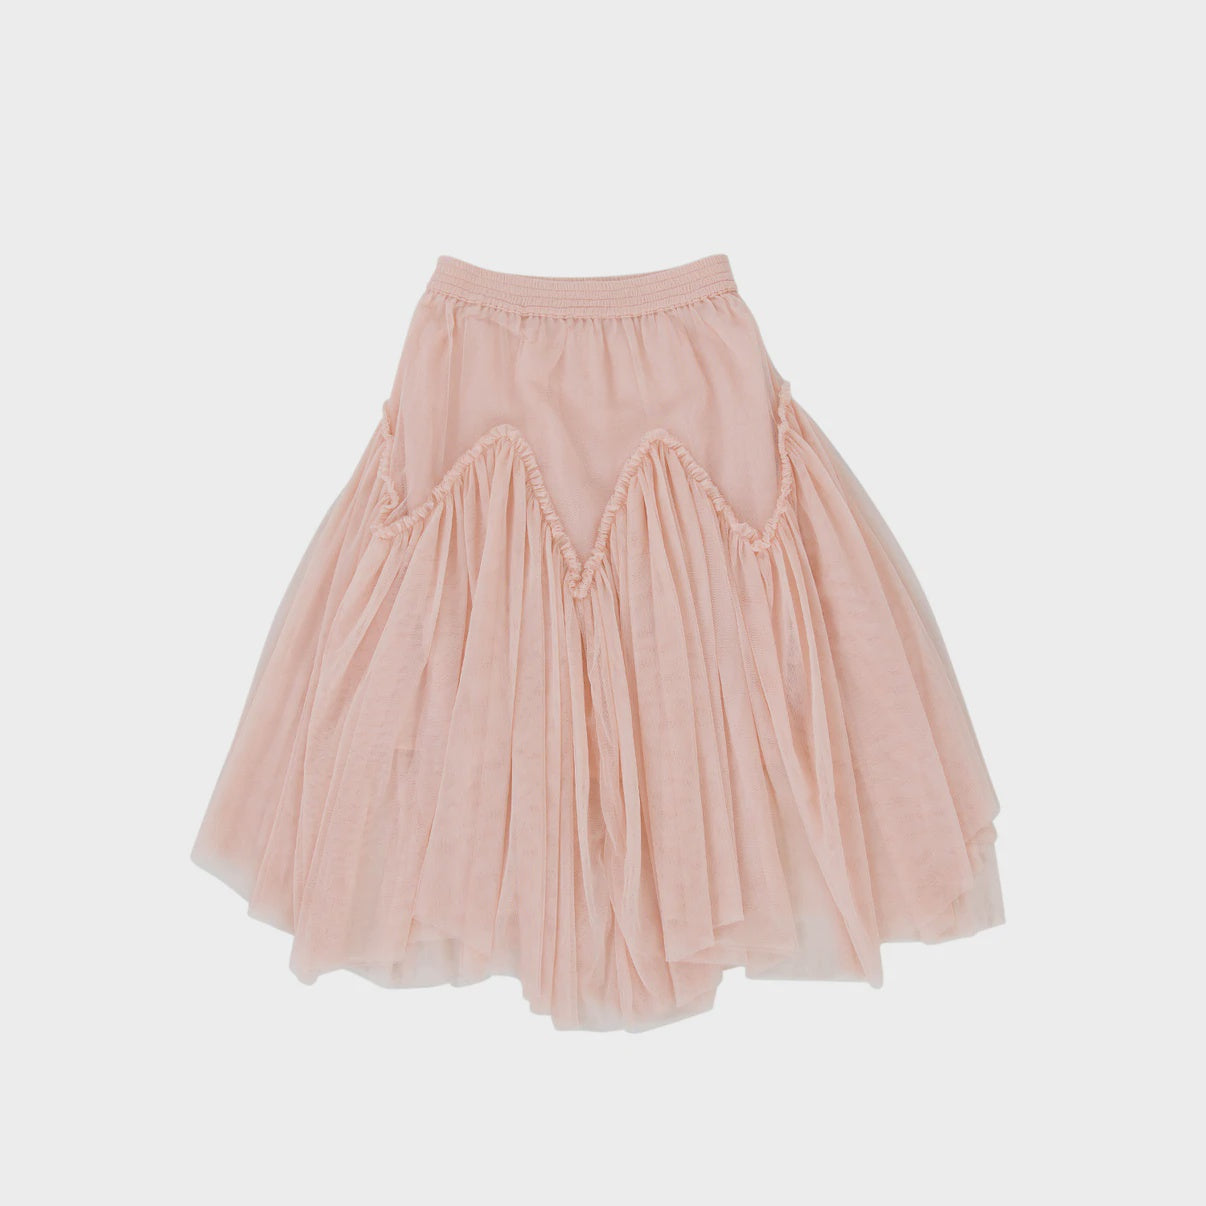 Peggy - Harper Skirt - Pale Pink